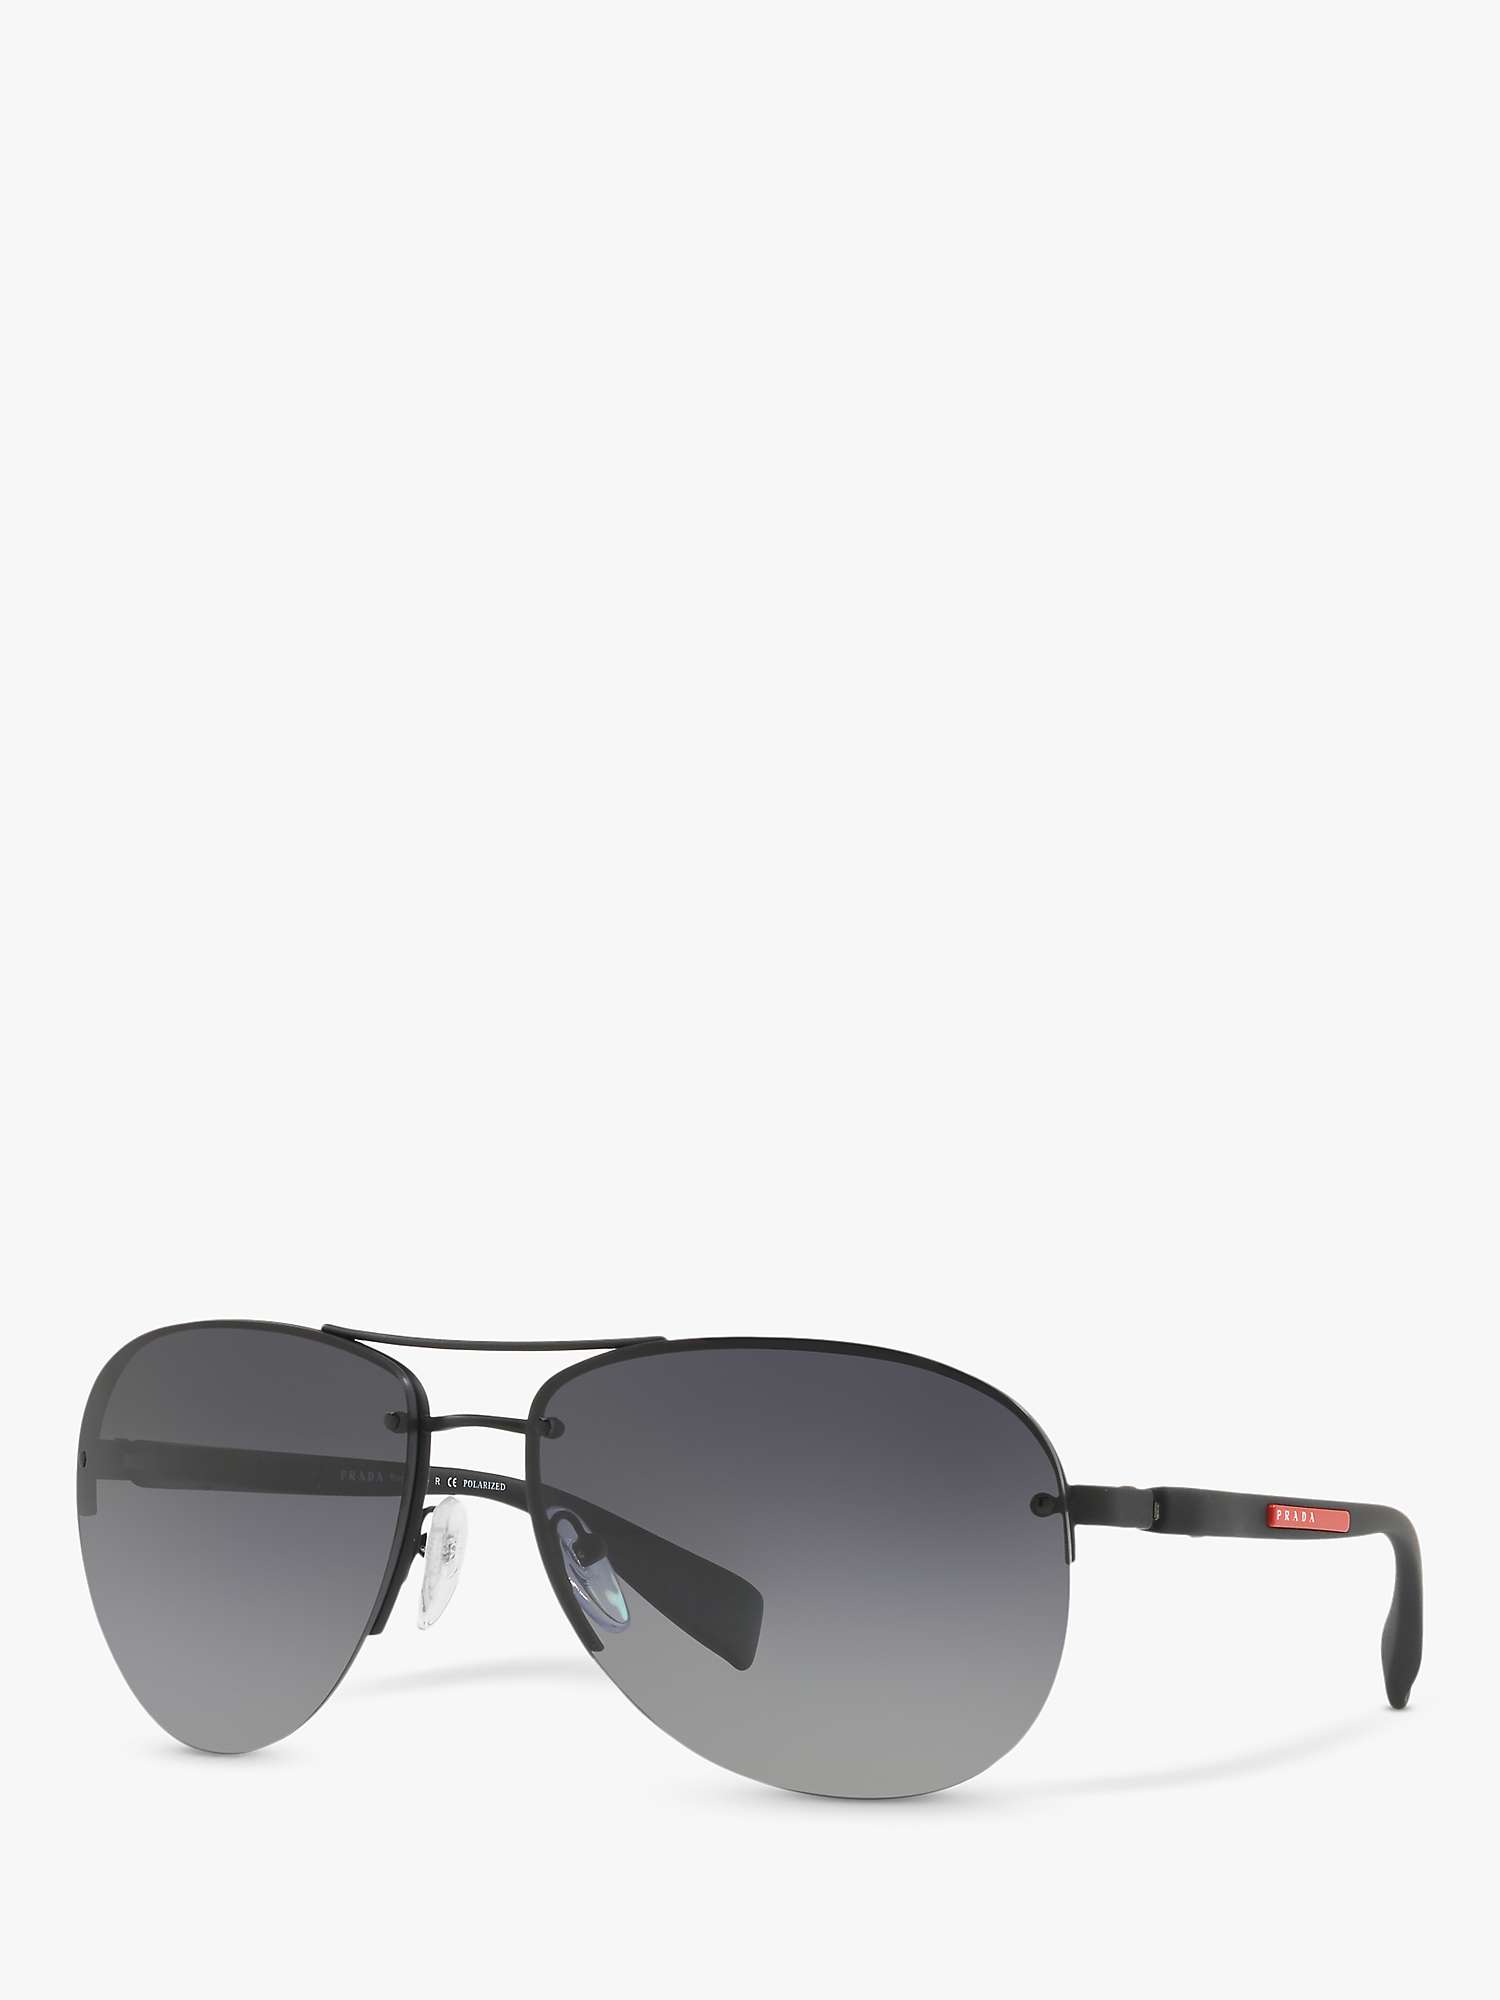 Buy Prada 56MS Men's Aviator Sunglasses, Black Rubber Online at johnlewis.com